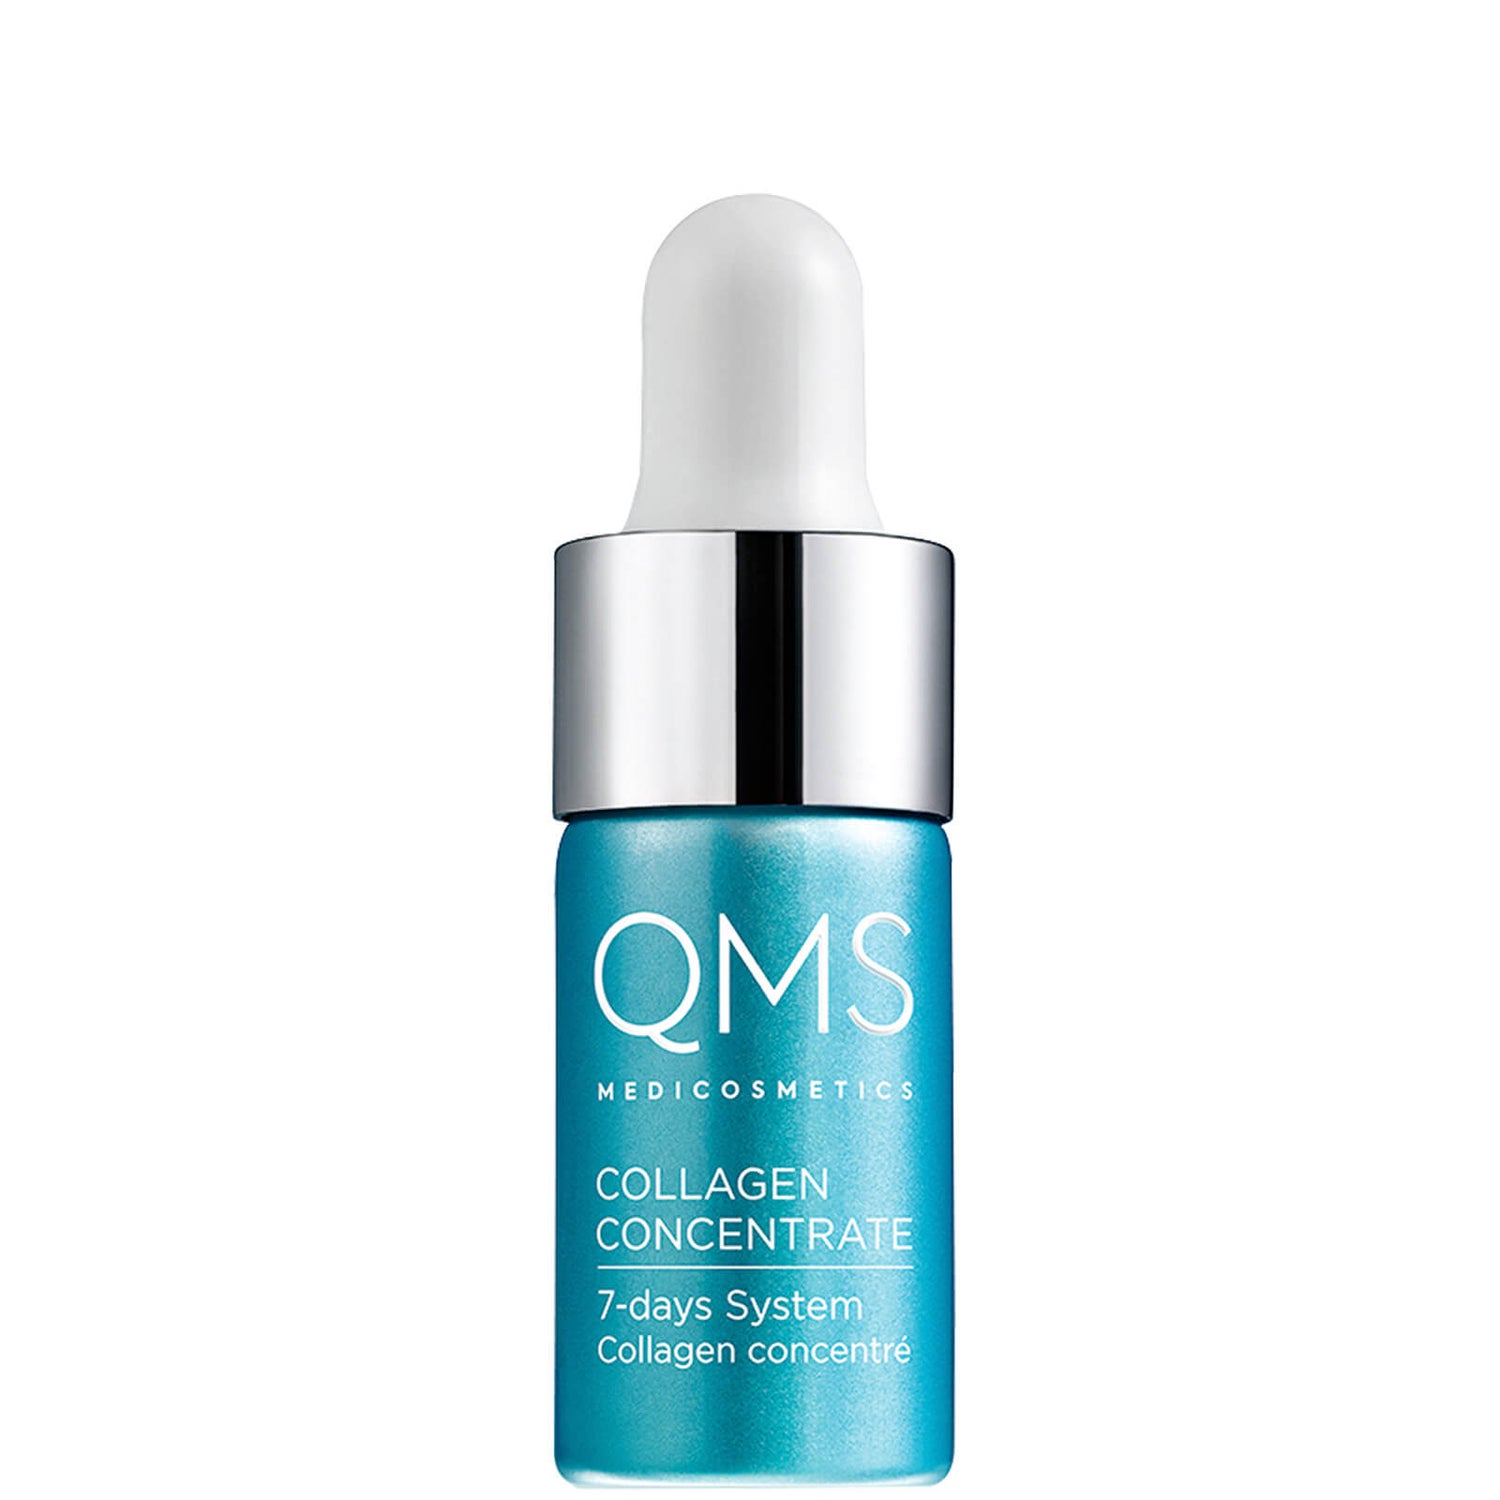 Skin концентрат коллаген. QMS косметика. QMS medicosmetics Sport Active Cream. QMS medicosmetics Cleansing Sponge.